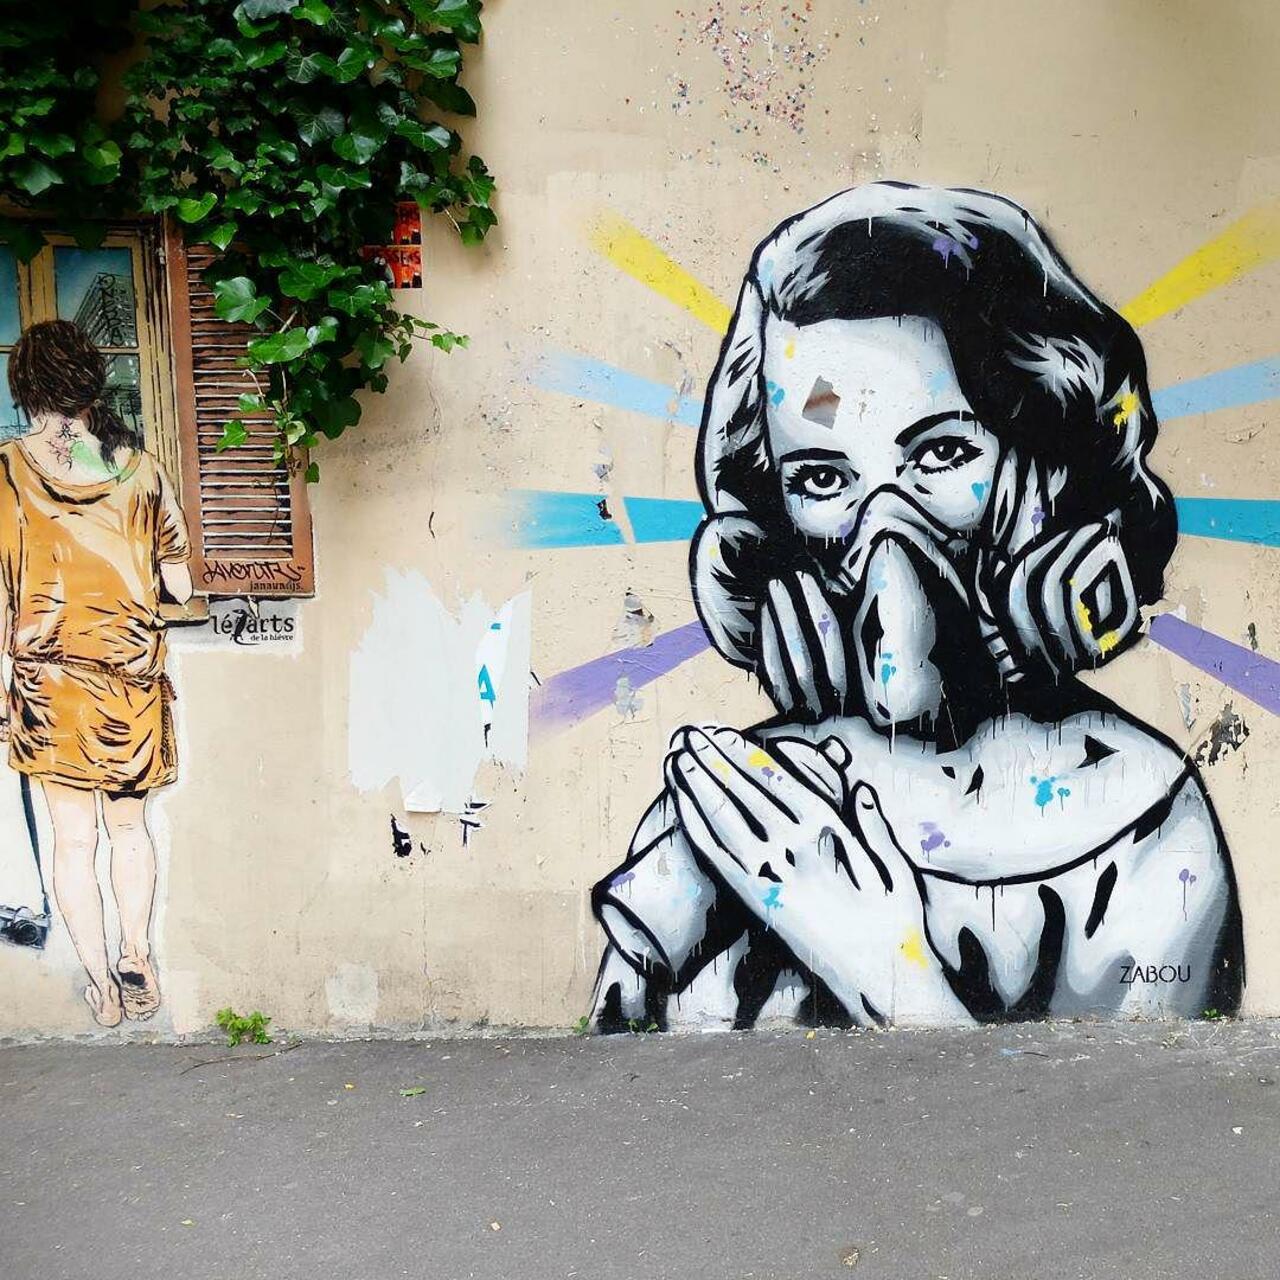 #Paris #graffiti photo by @alphaquadra http://ift.tt/1M9KaHV #StreetArt http://t.co/xoMYbXrB2r